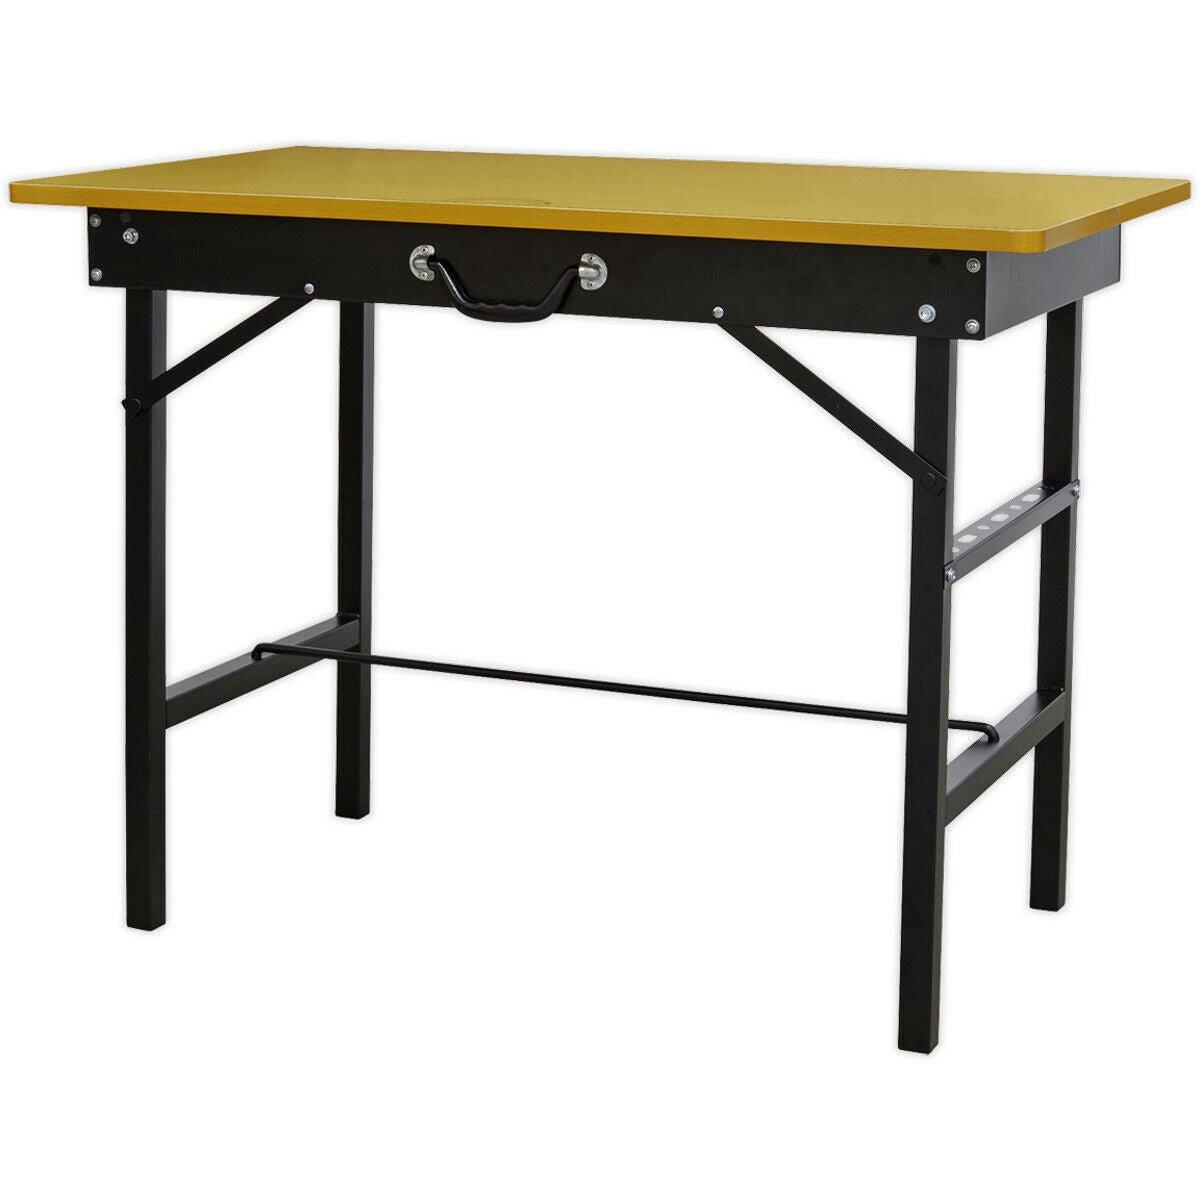 1m Folding Portable Workbench - Lightweight & Carry Handles - Painter DIY Table